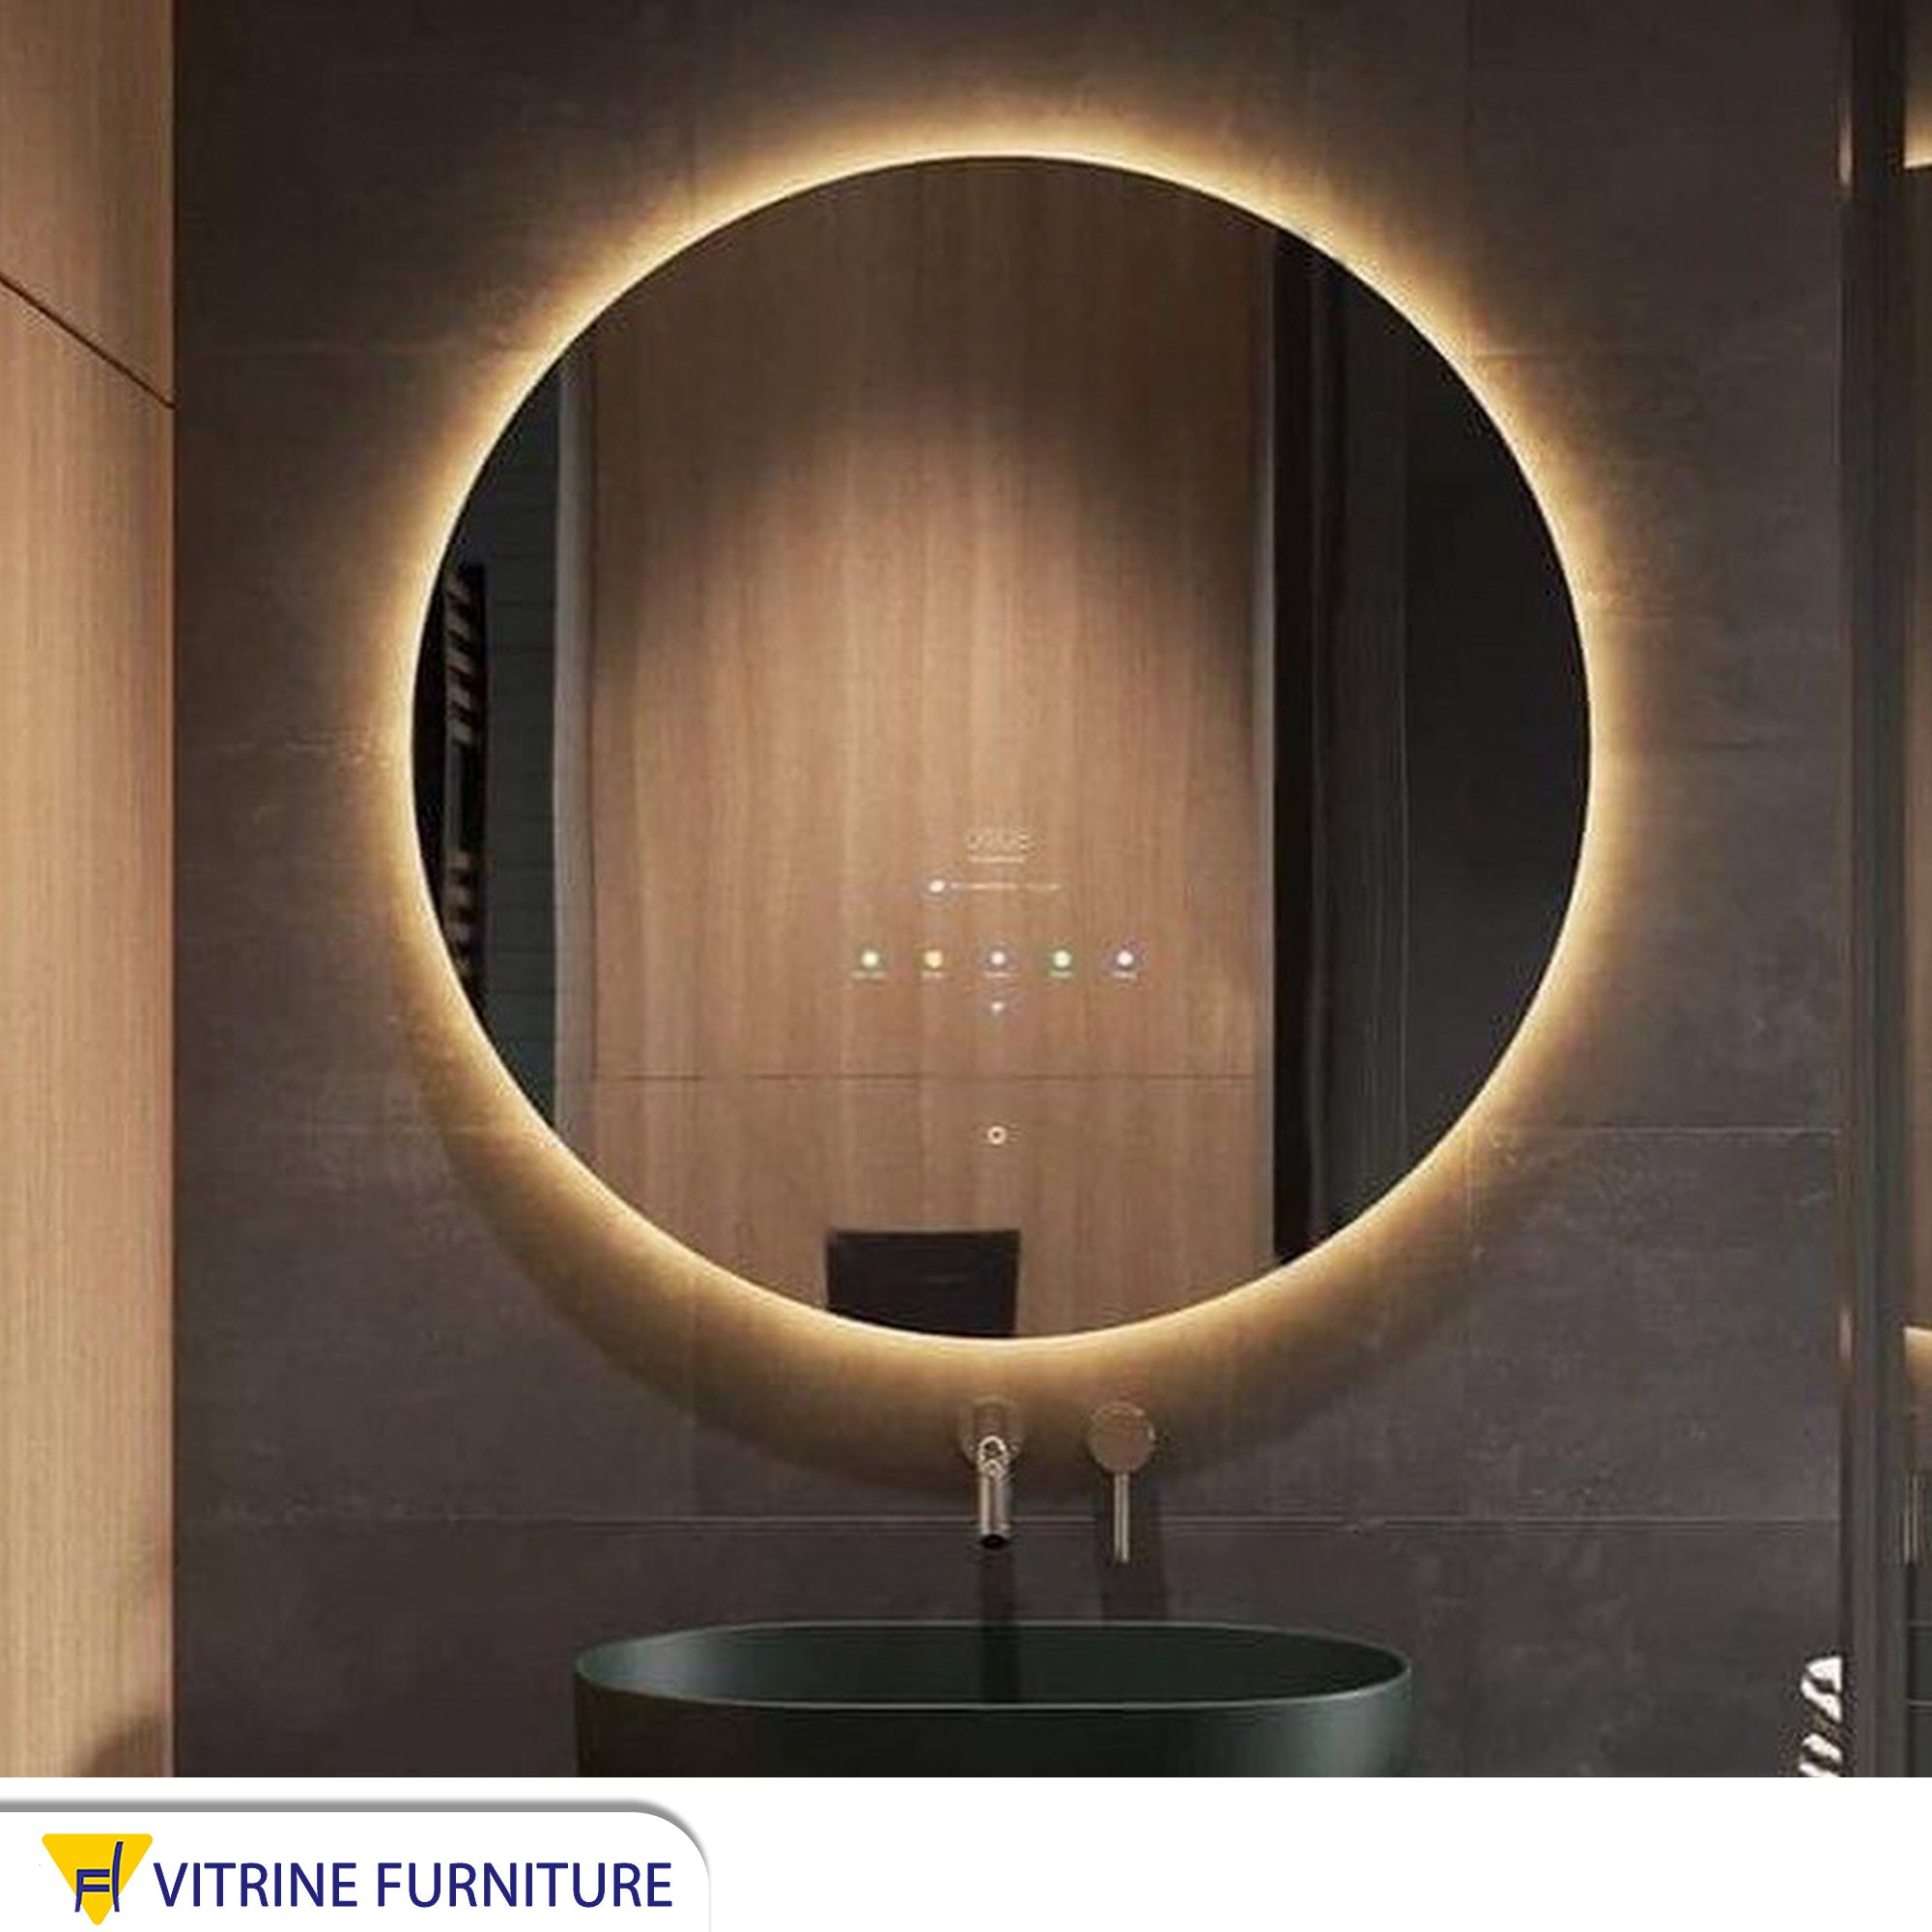 round mirror 60 cm in diameter LED lighted